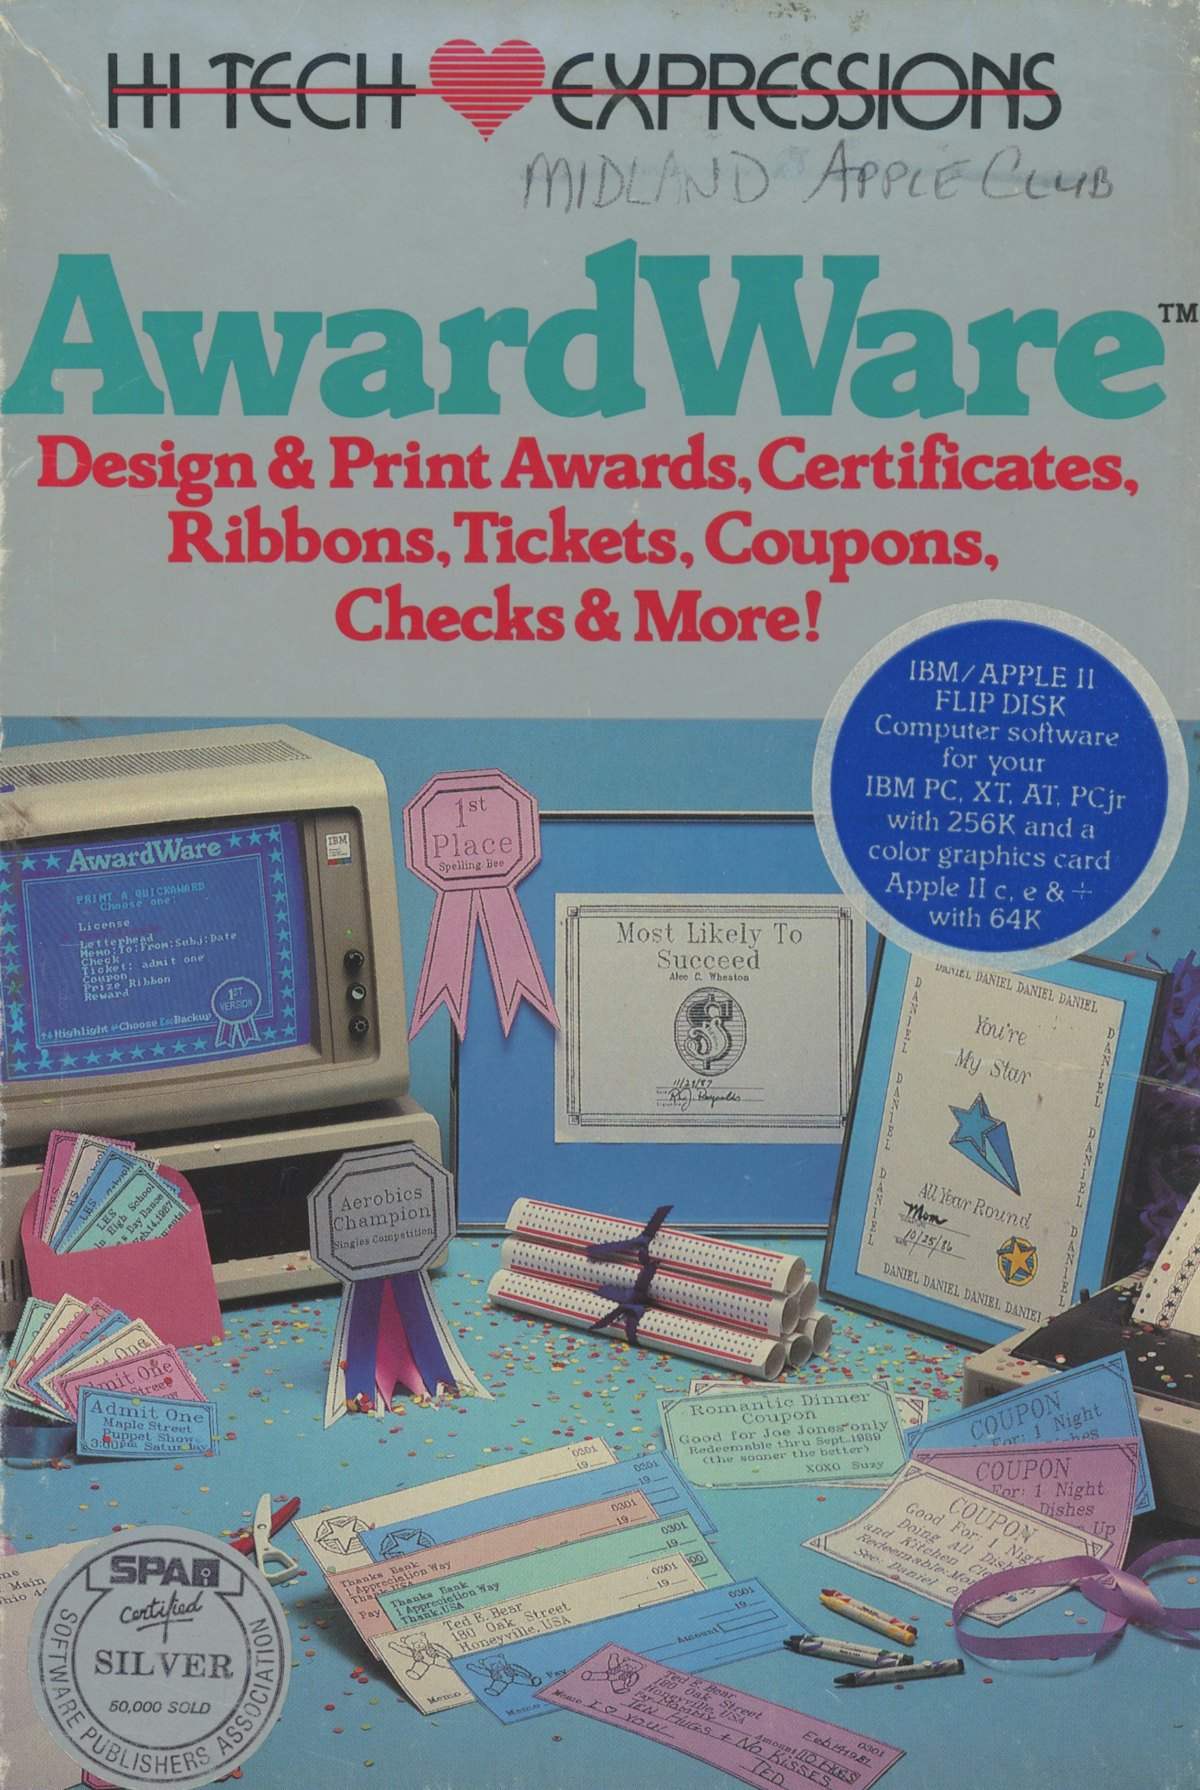 AwardWare: Design & Print Awards, Certificates, Ribbons, TIckets, Coupons, Checks & More!